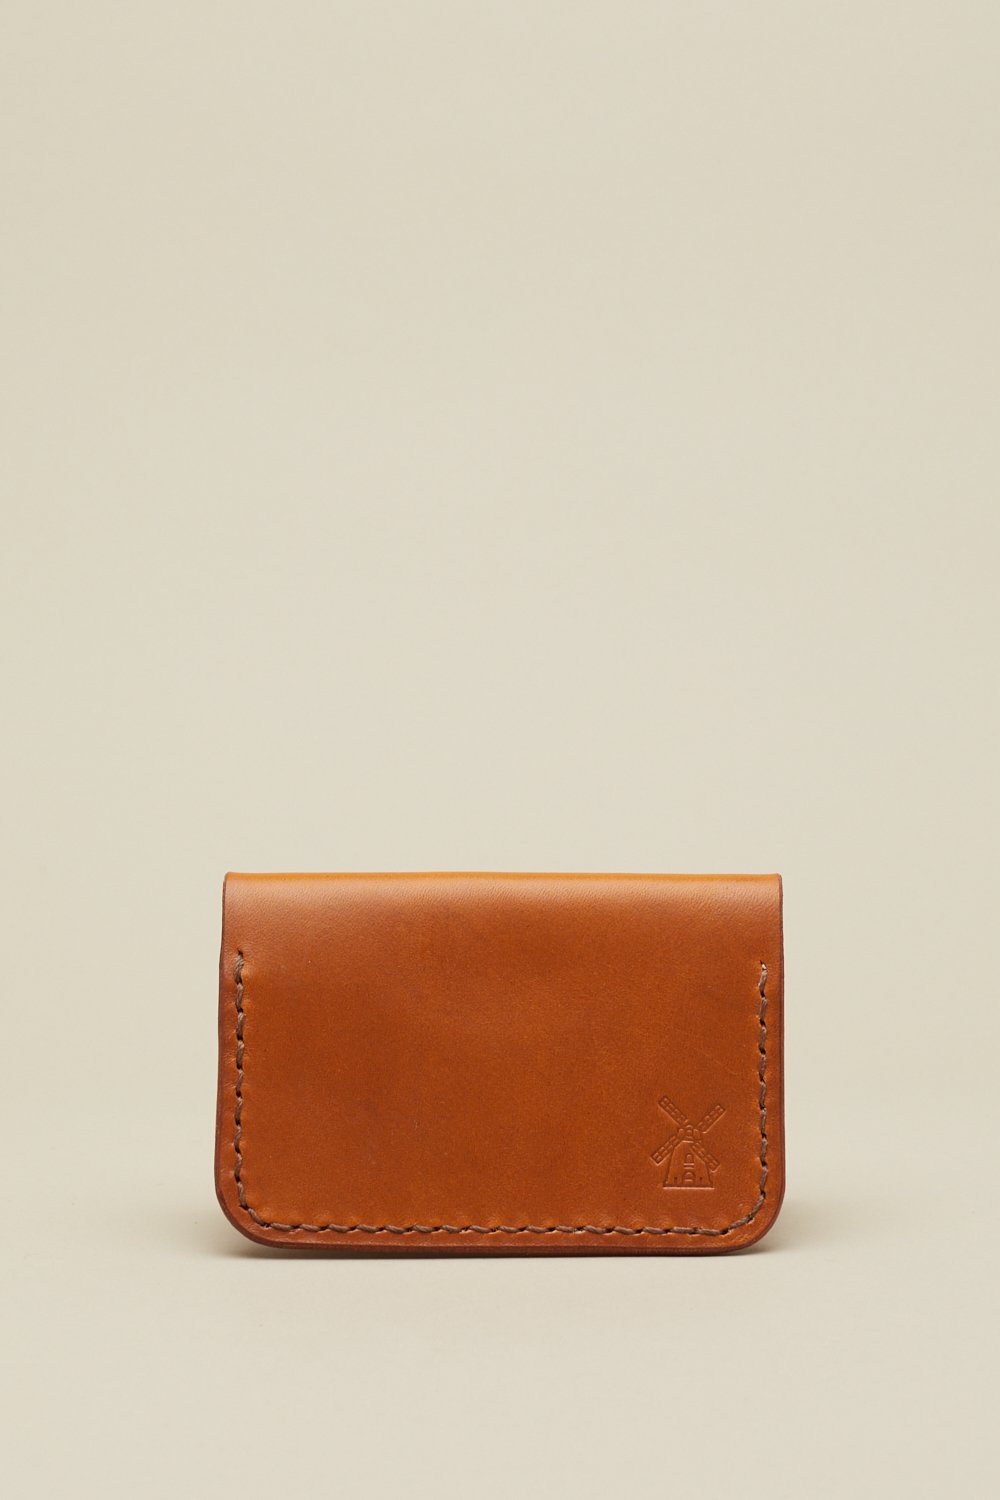 Image of Fold Wallet in Tan